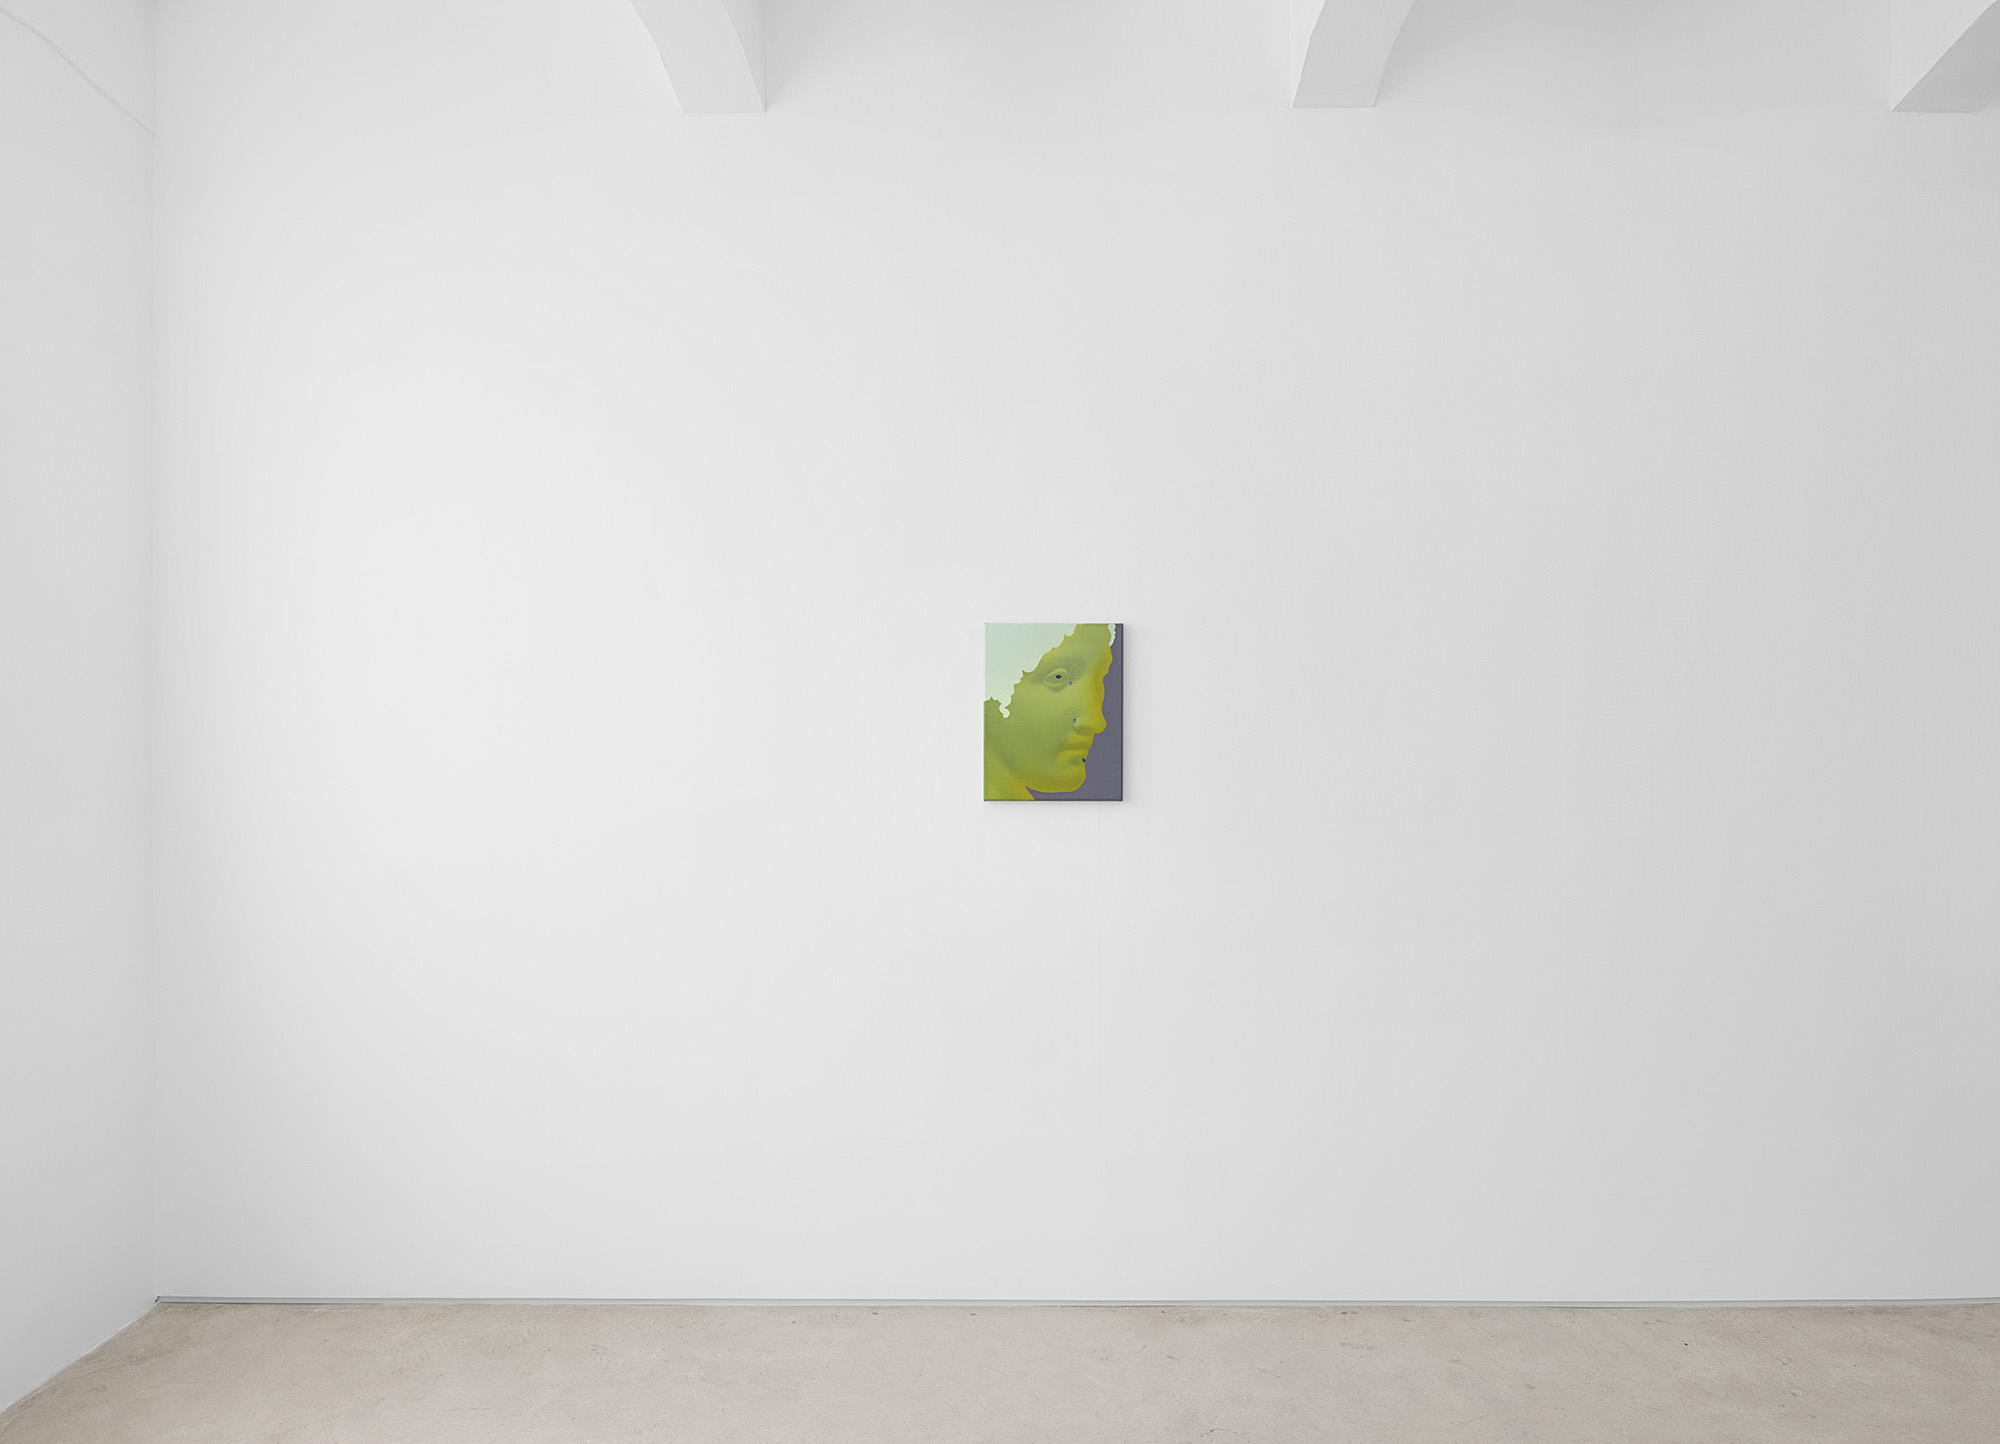 Vivian Greven, The Negatives, solo exhibition at Gallery Vacancy, installation view 4